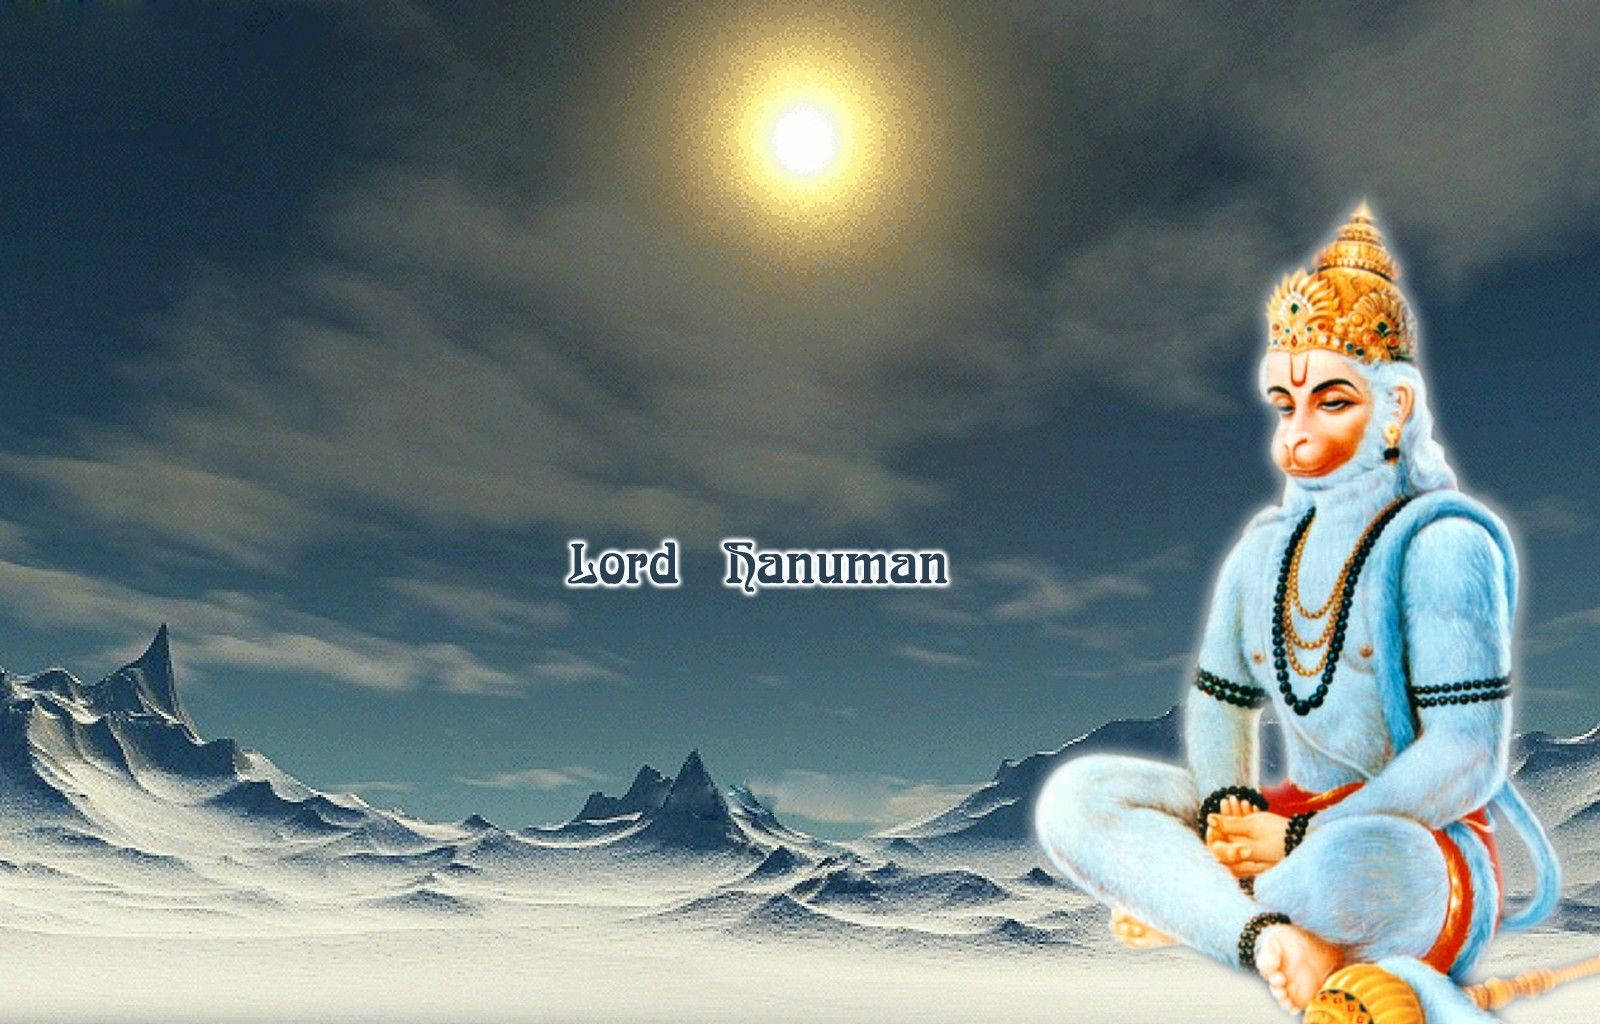 Hanuman On Snow Mountain 4k Hd Background